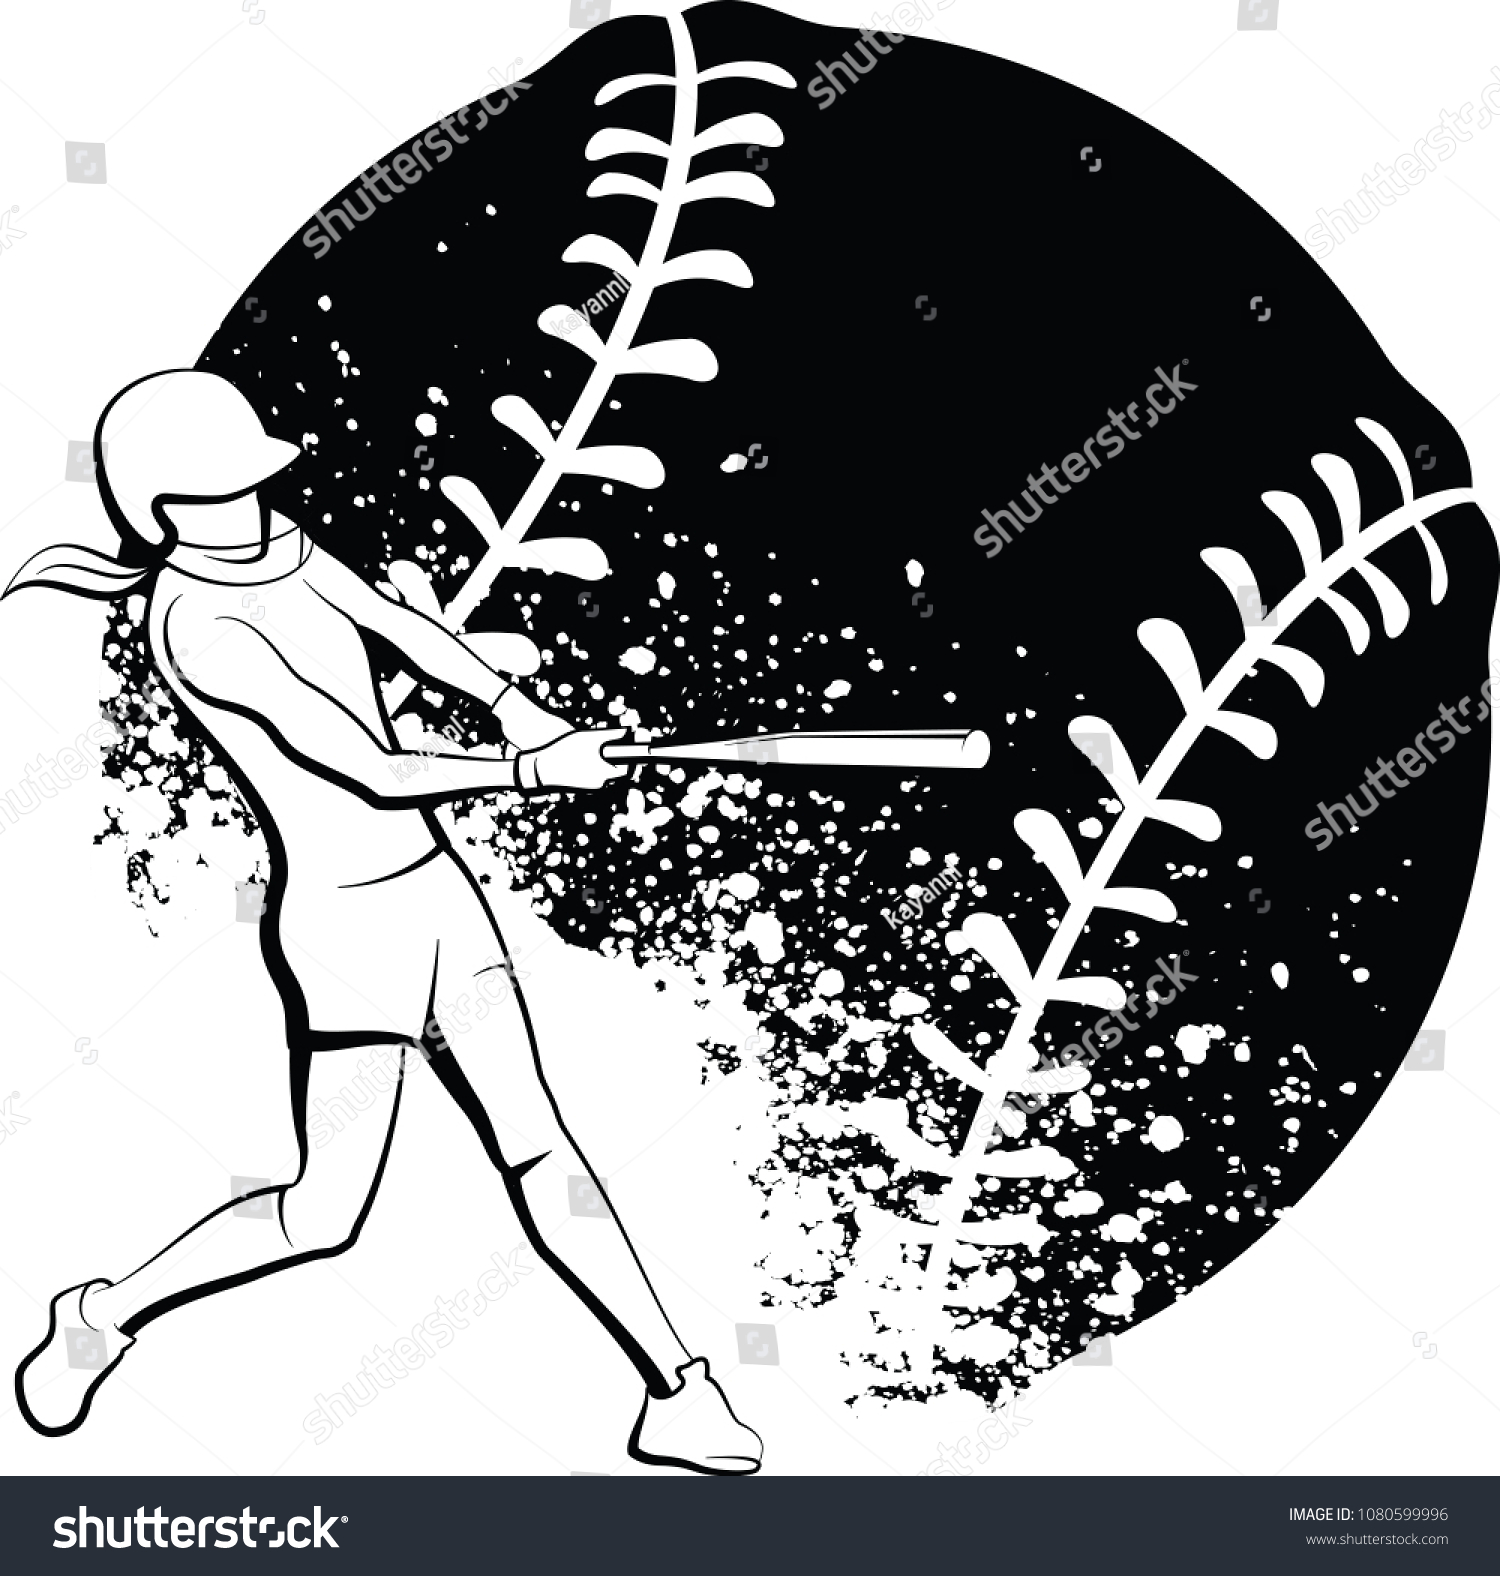 Softball stock images